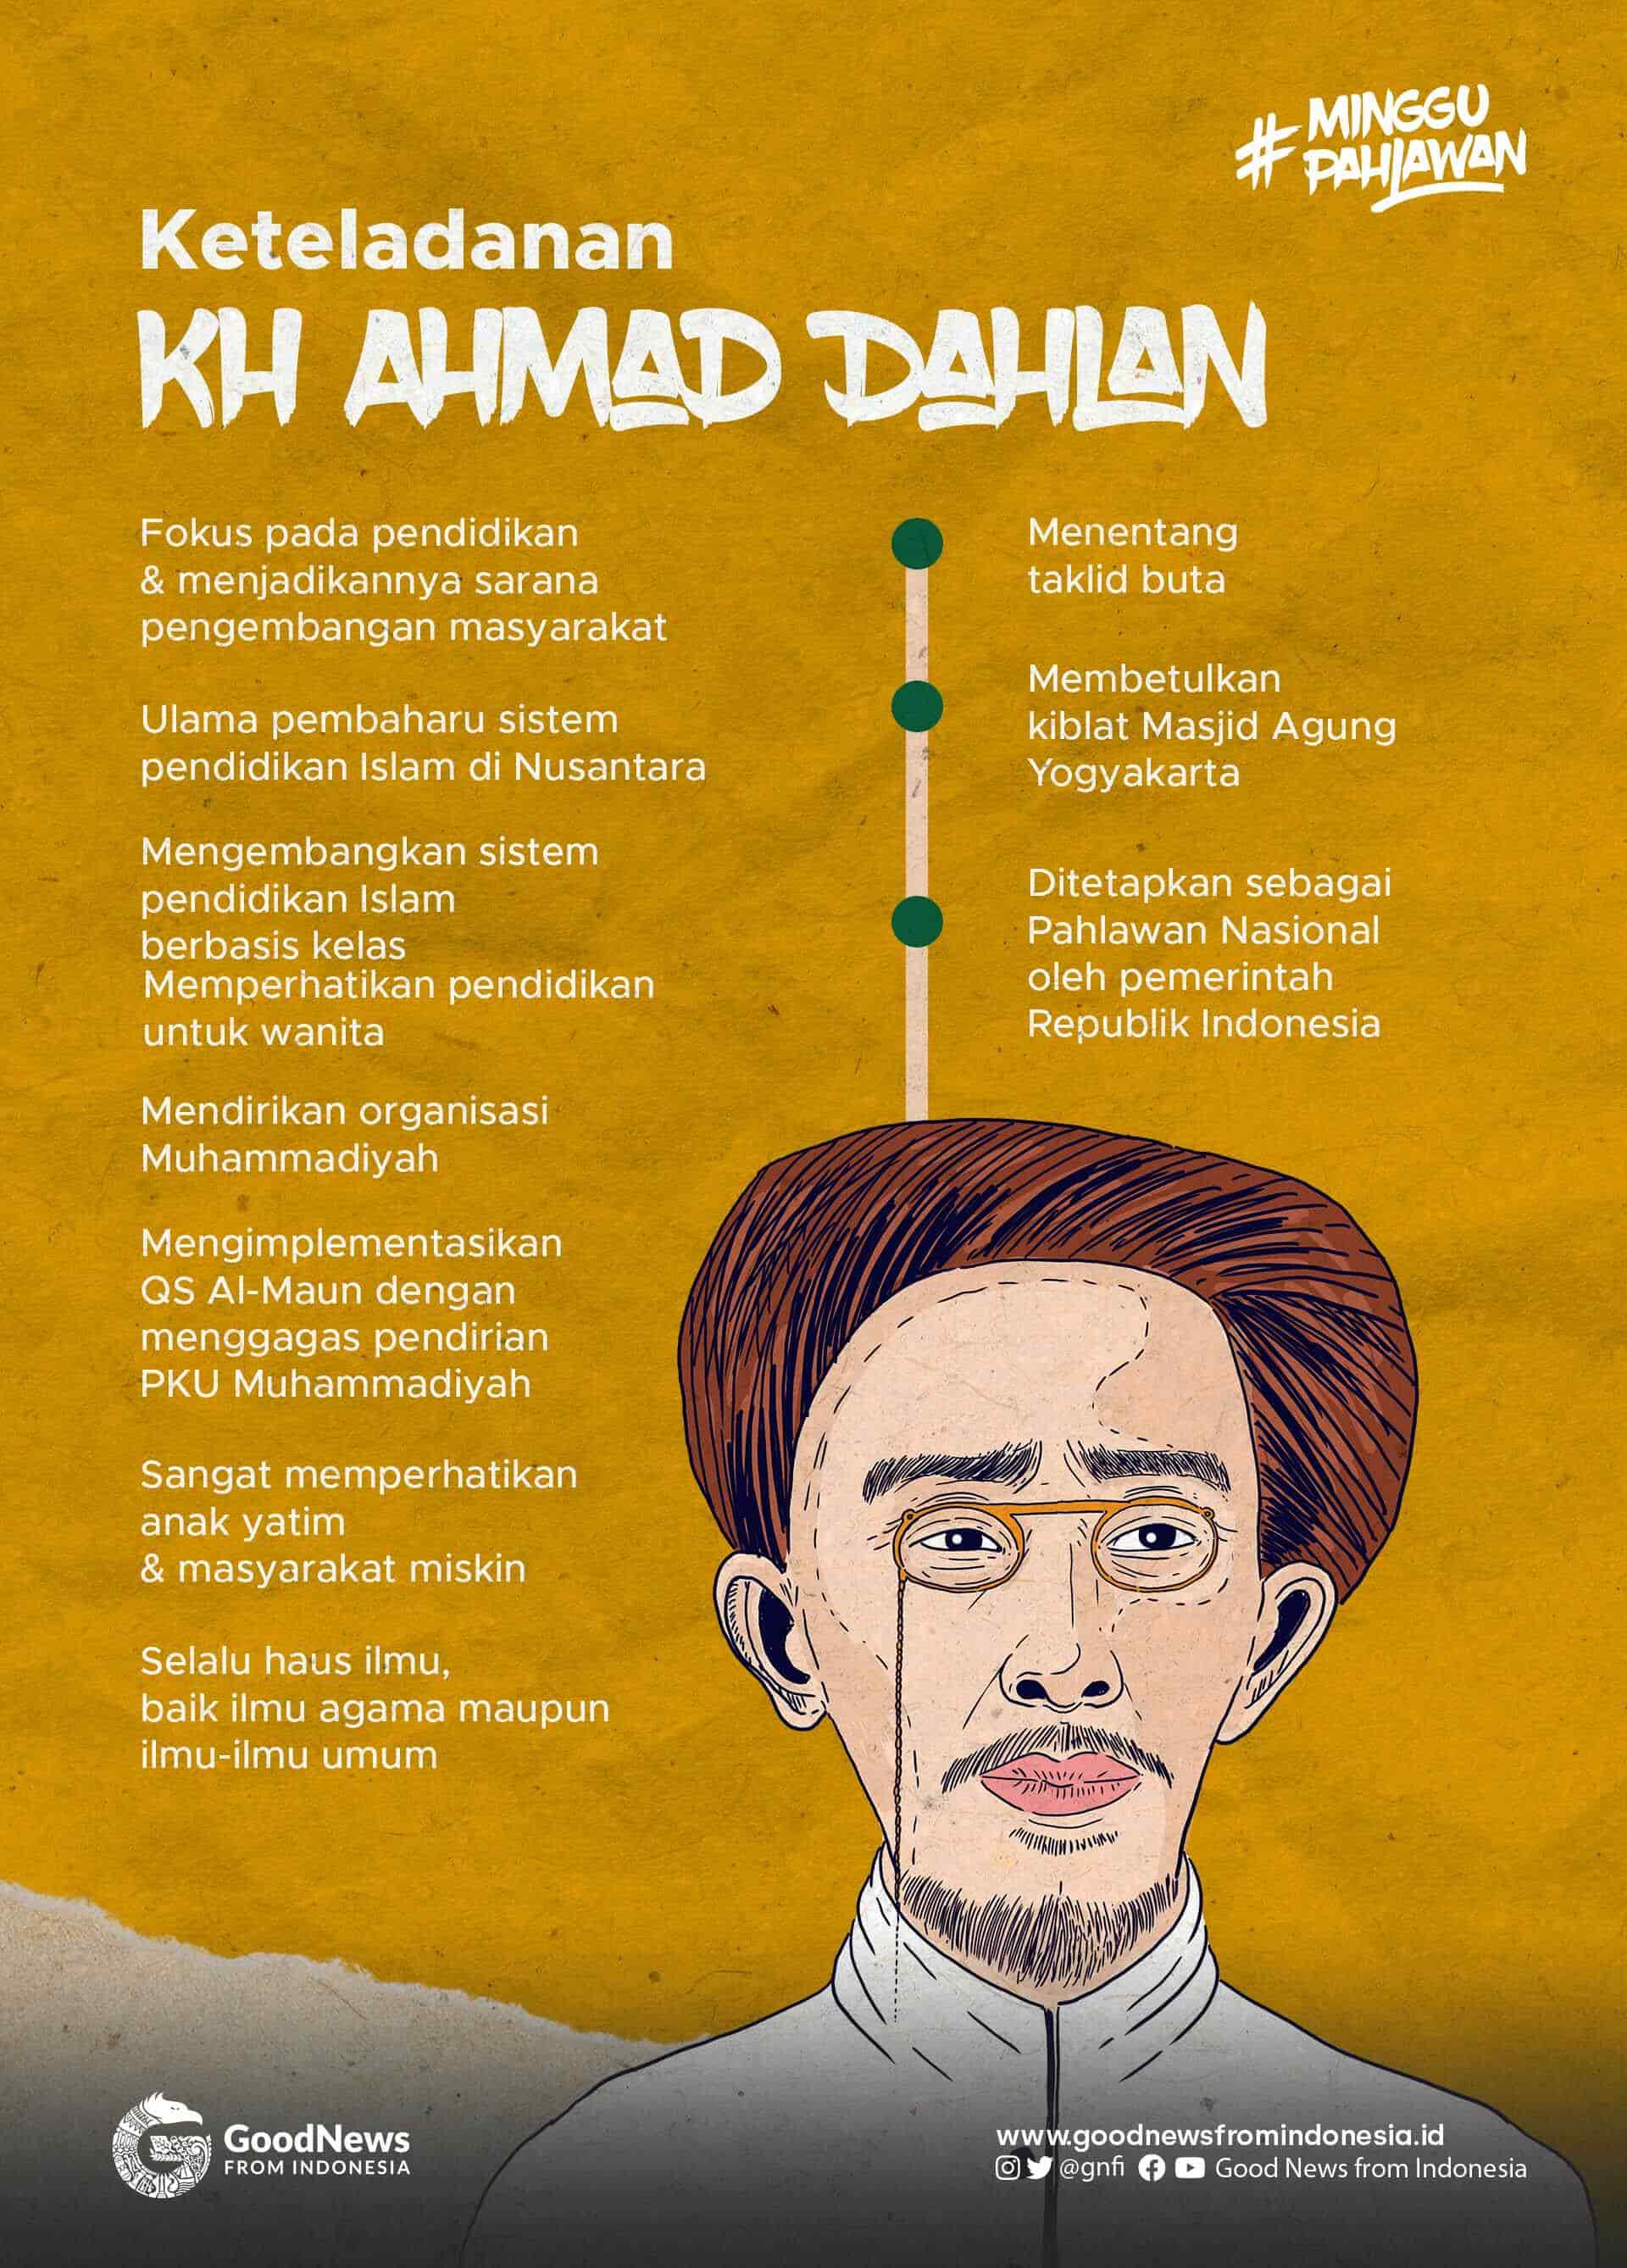 Bagaimana dampak pembaruan islam pada masa modern bagi bangsa indonesia